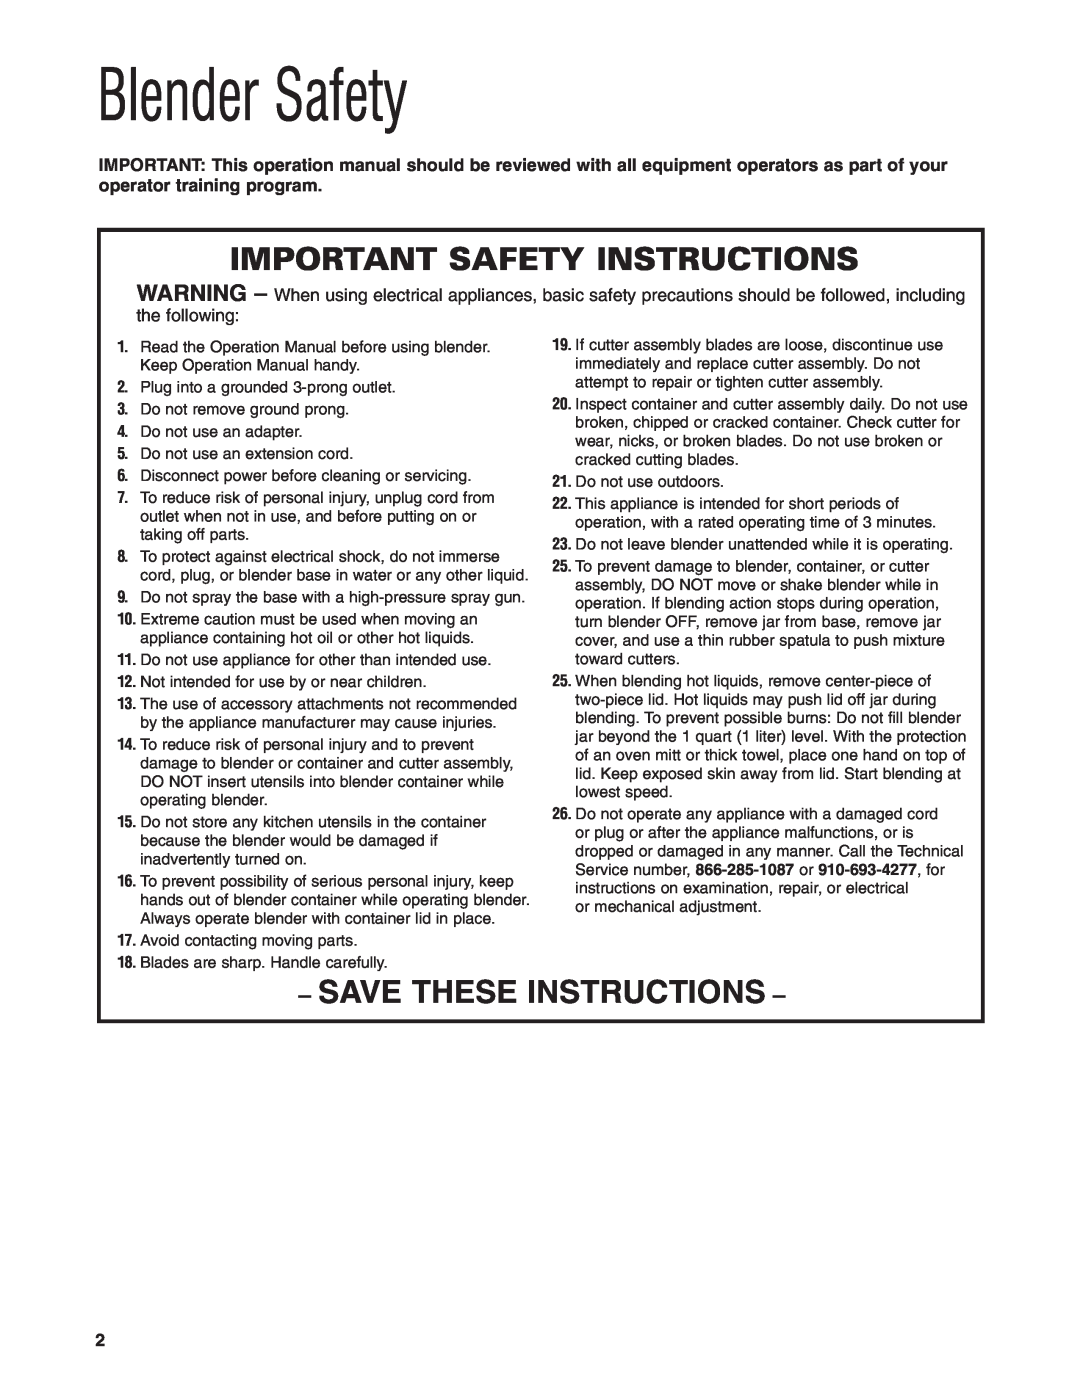 Hamilton Beach HBB250S manuel dutilisation Blender Safety, Important Safety Instructions, Save These Instructions 